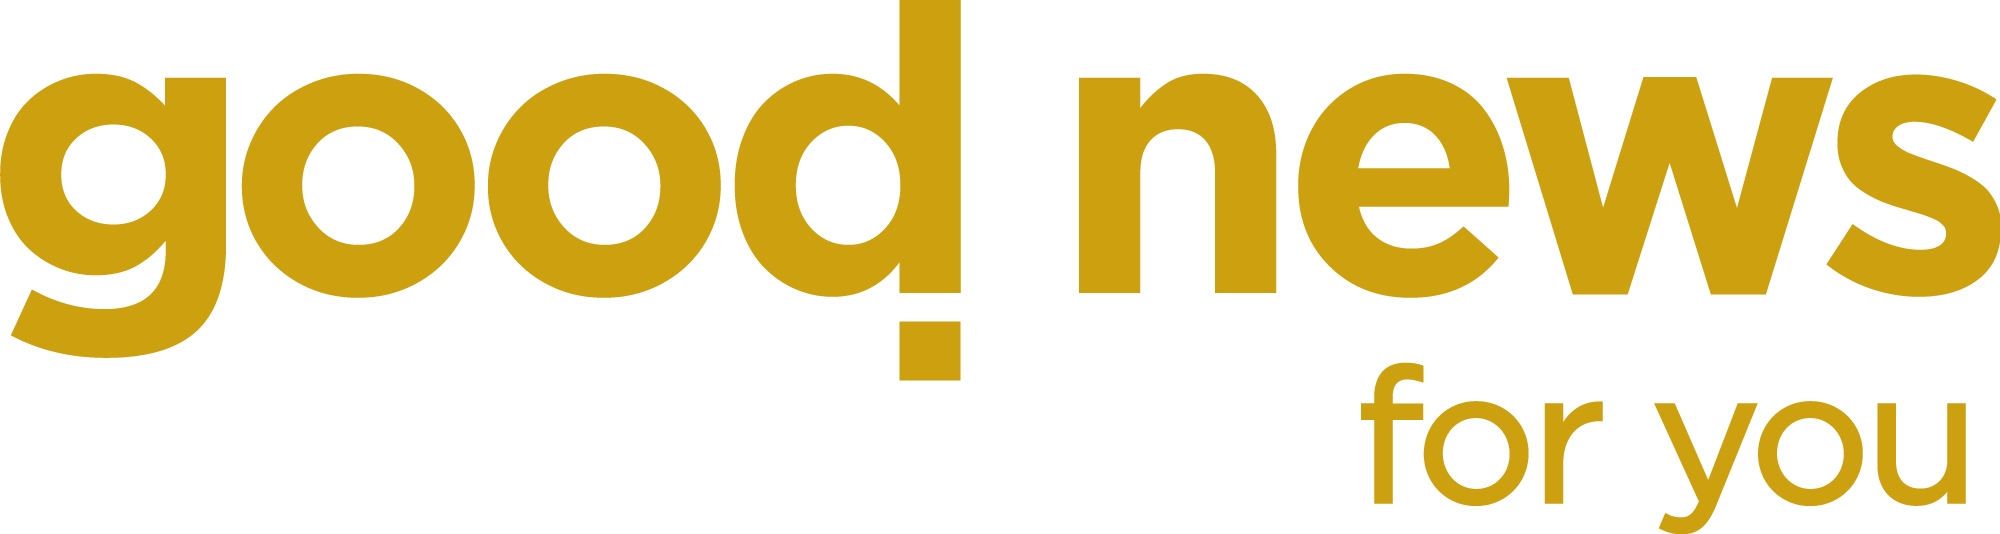 Logo good news for you gold